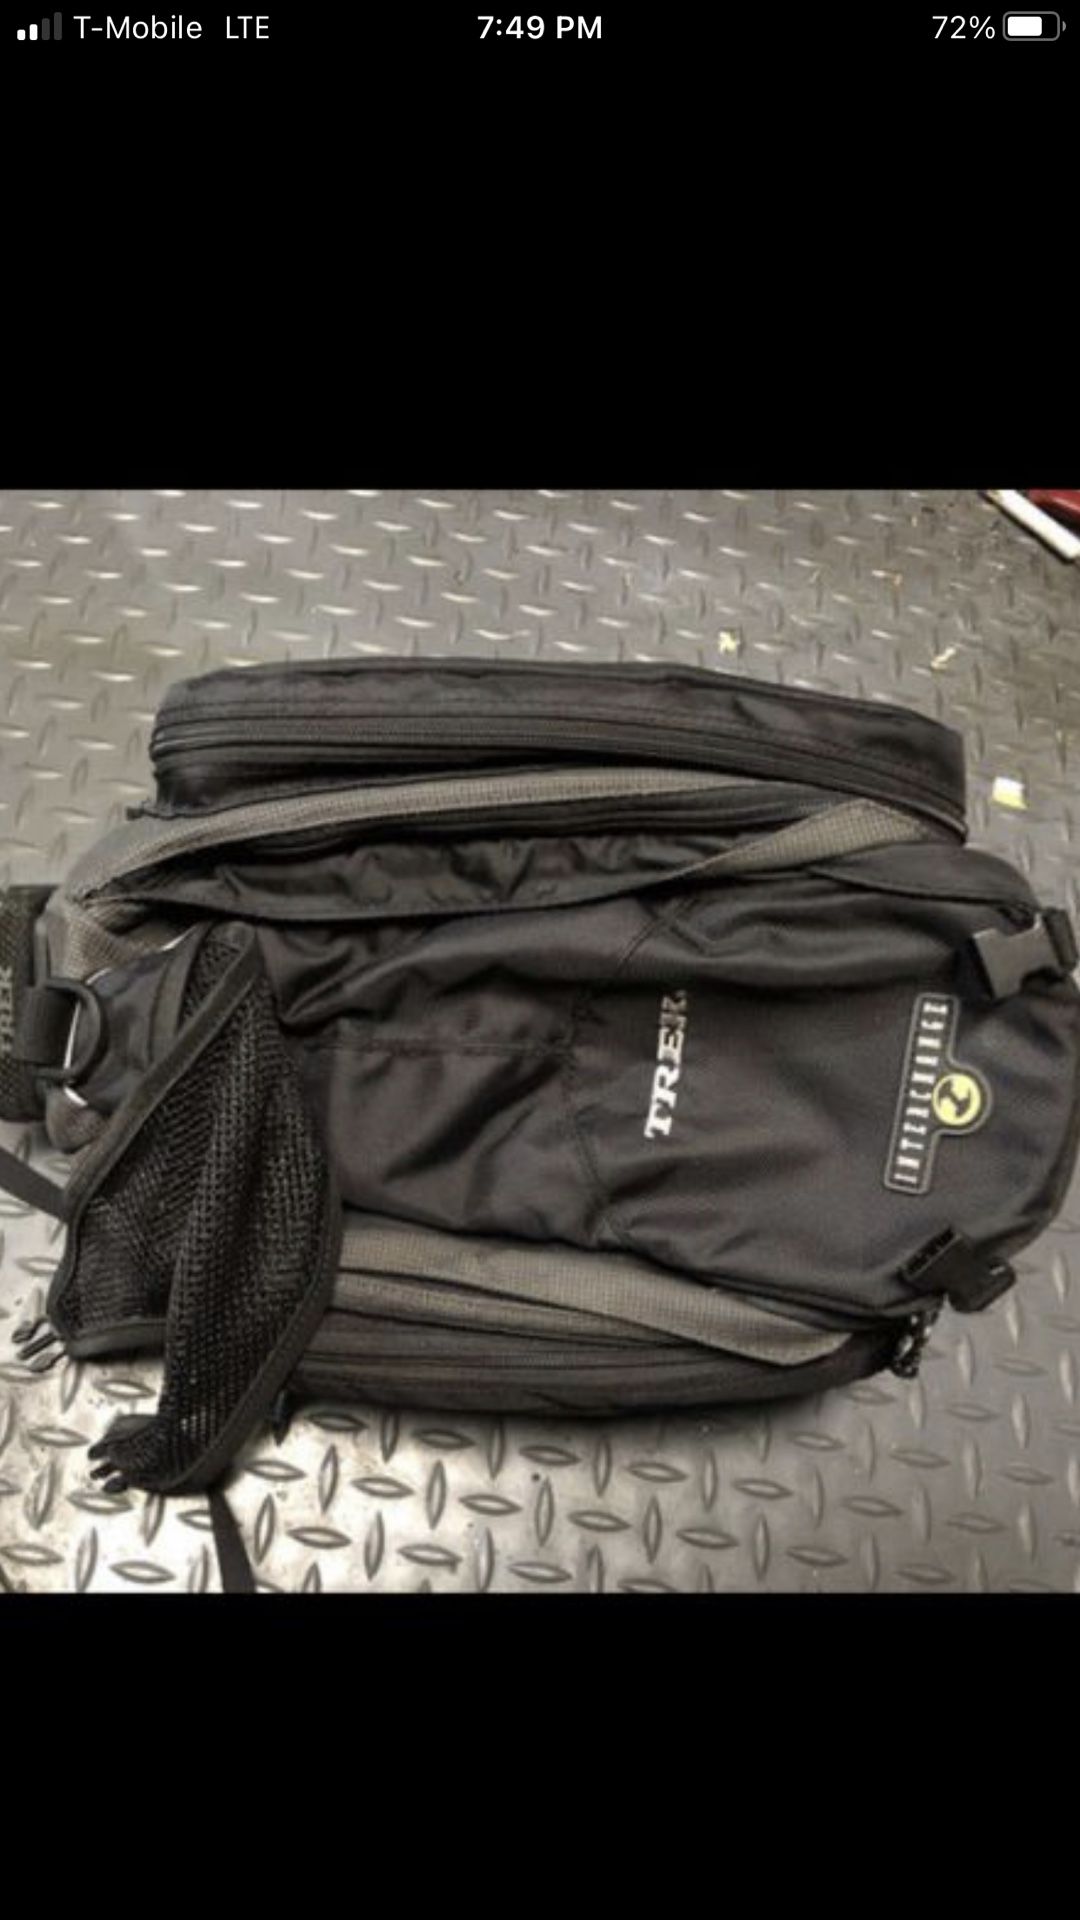 Trek interchange rack carbon fiber and bag